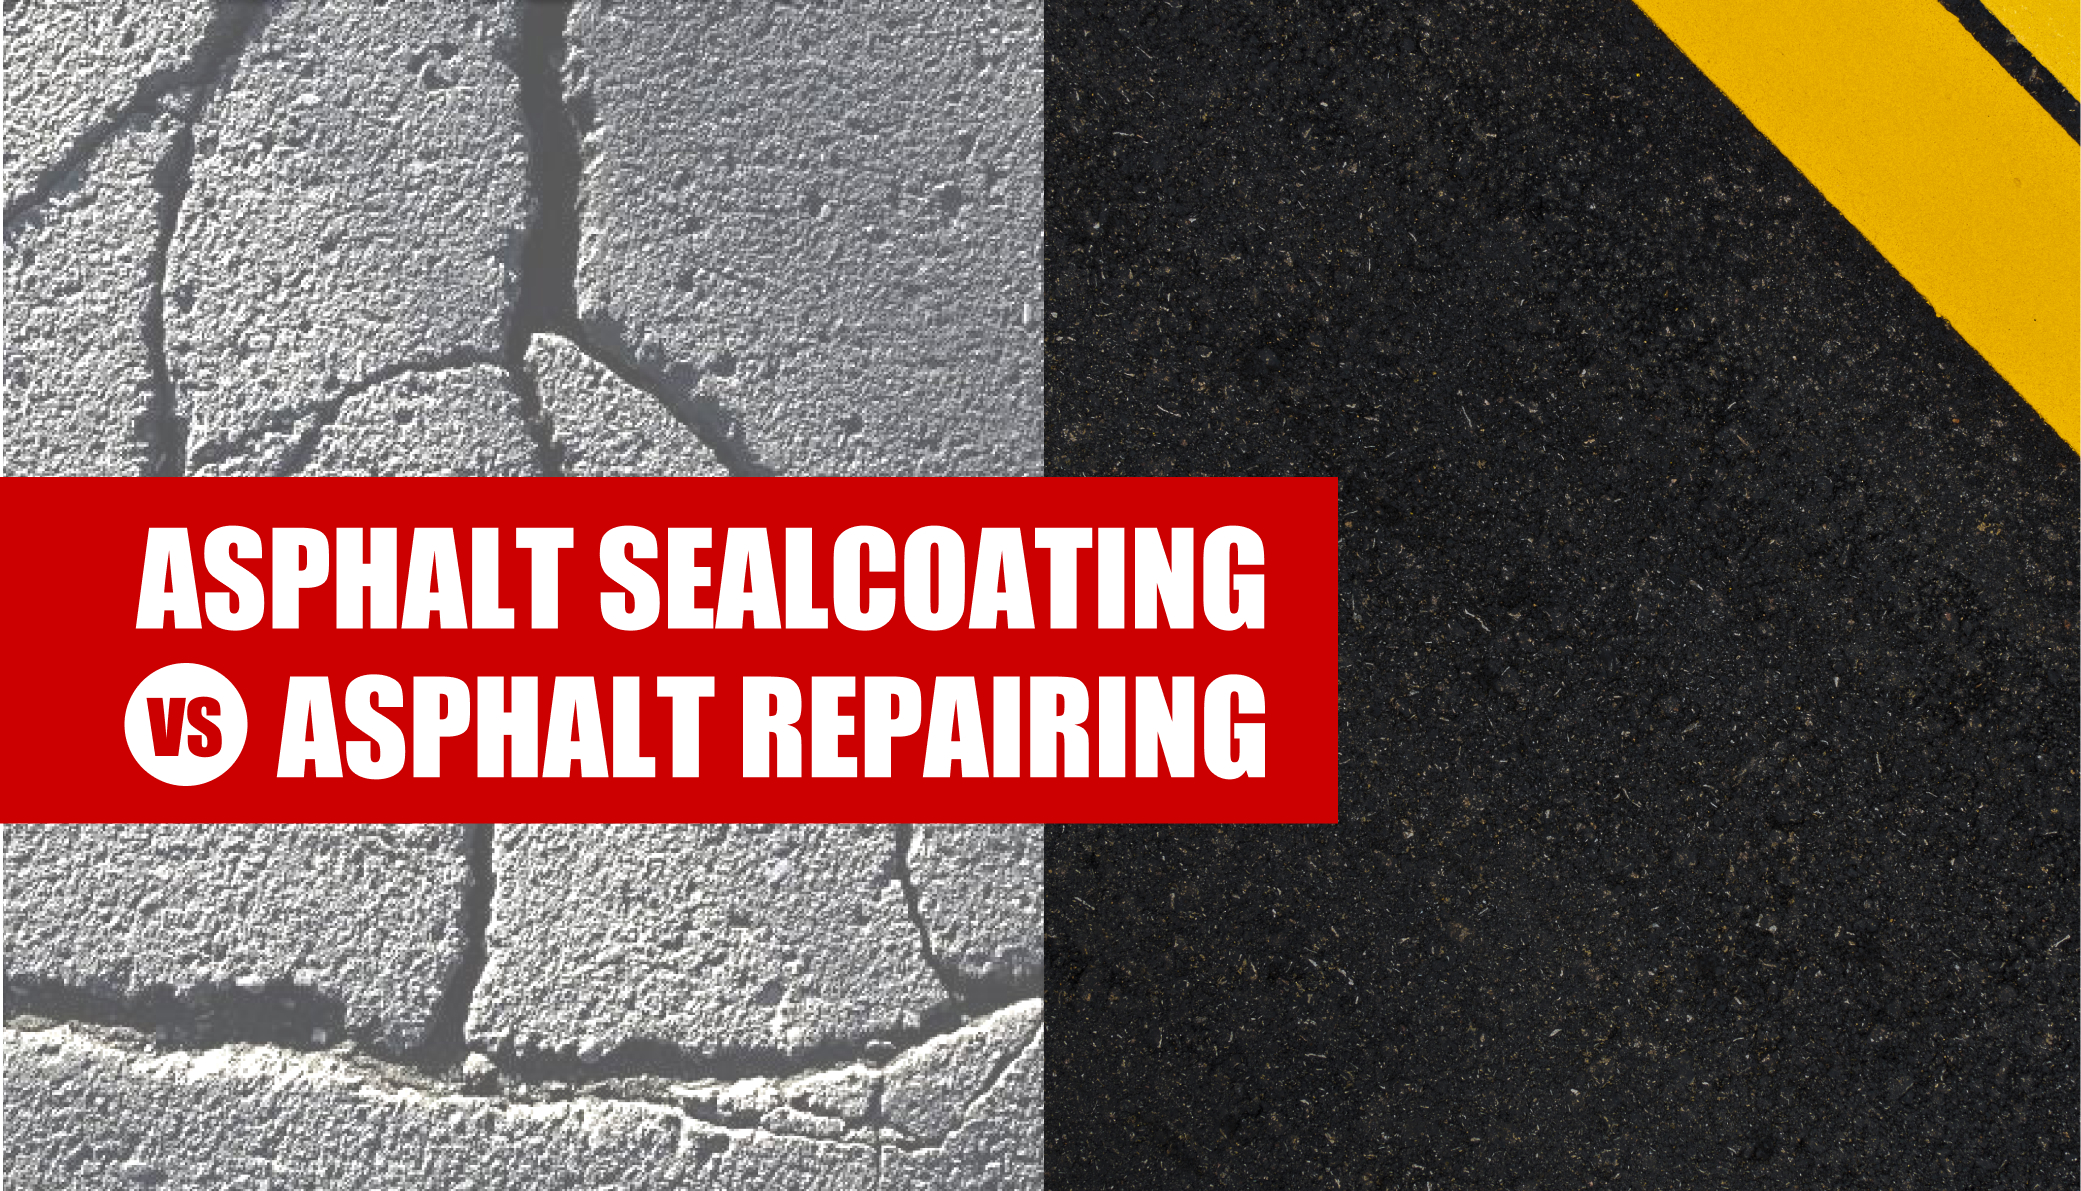 asphalt seacoating